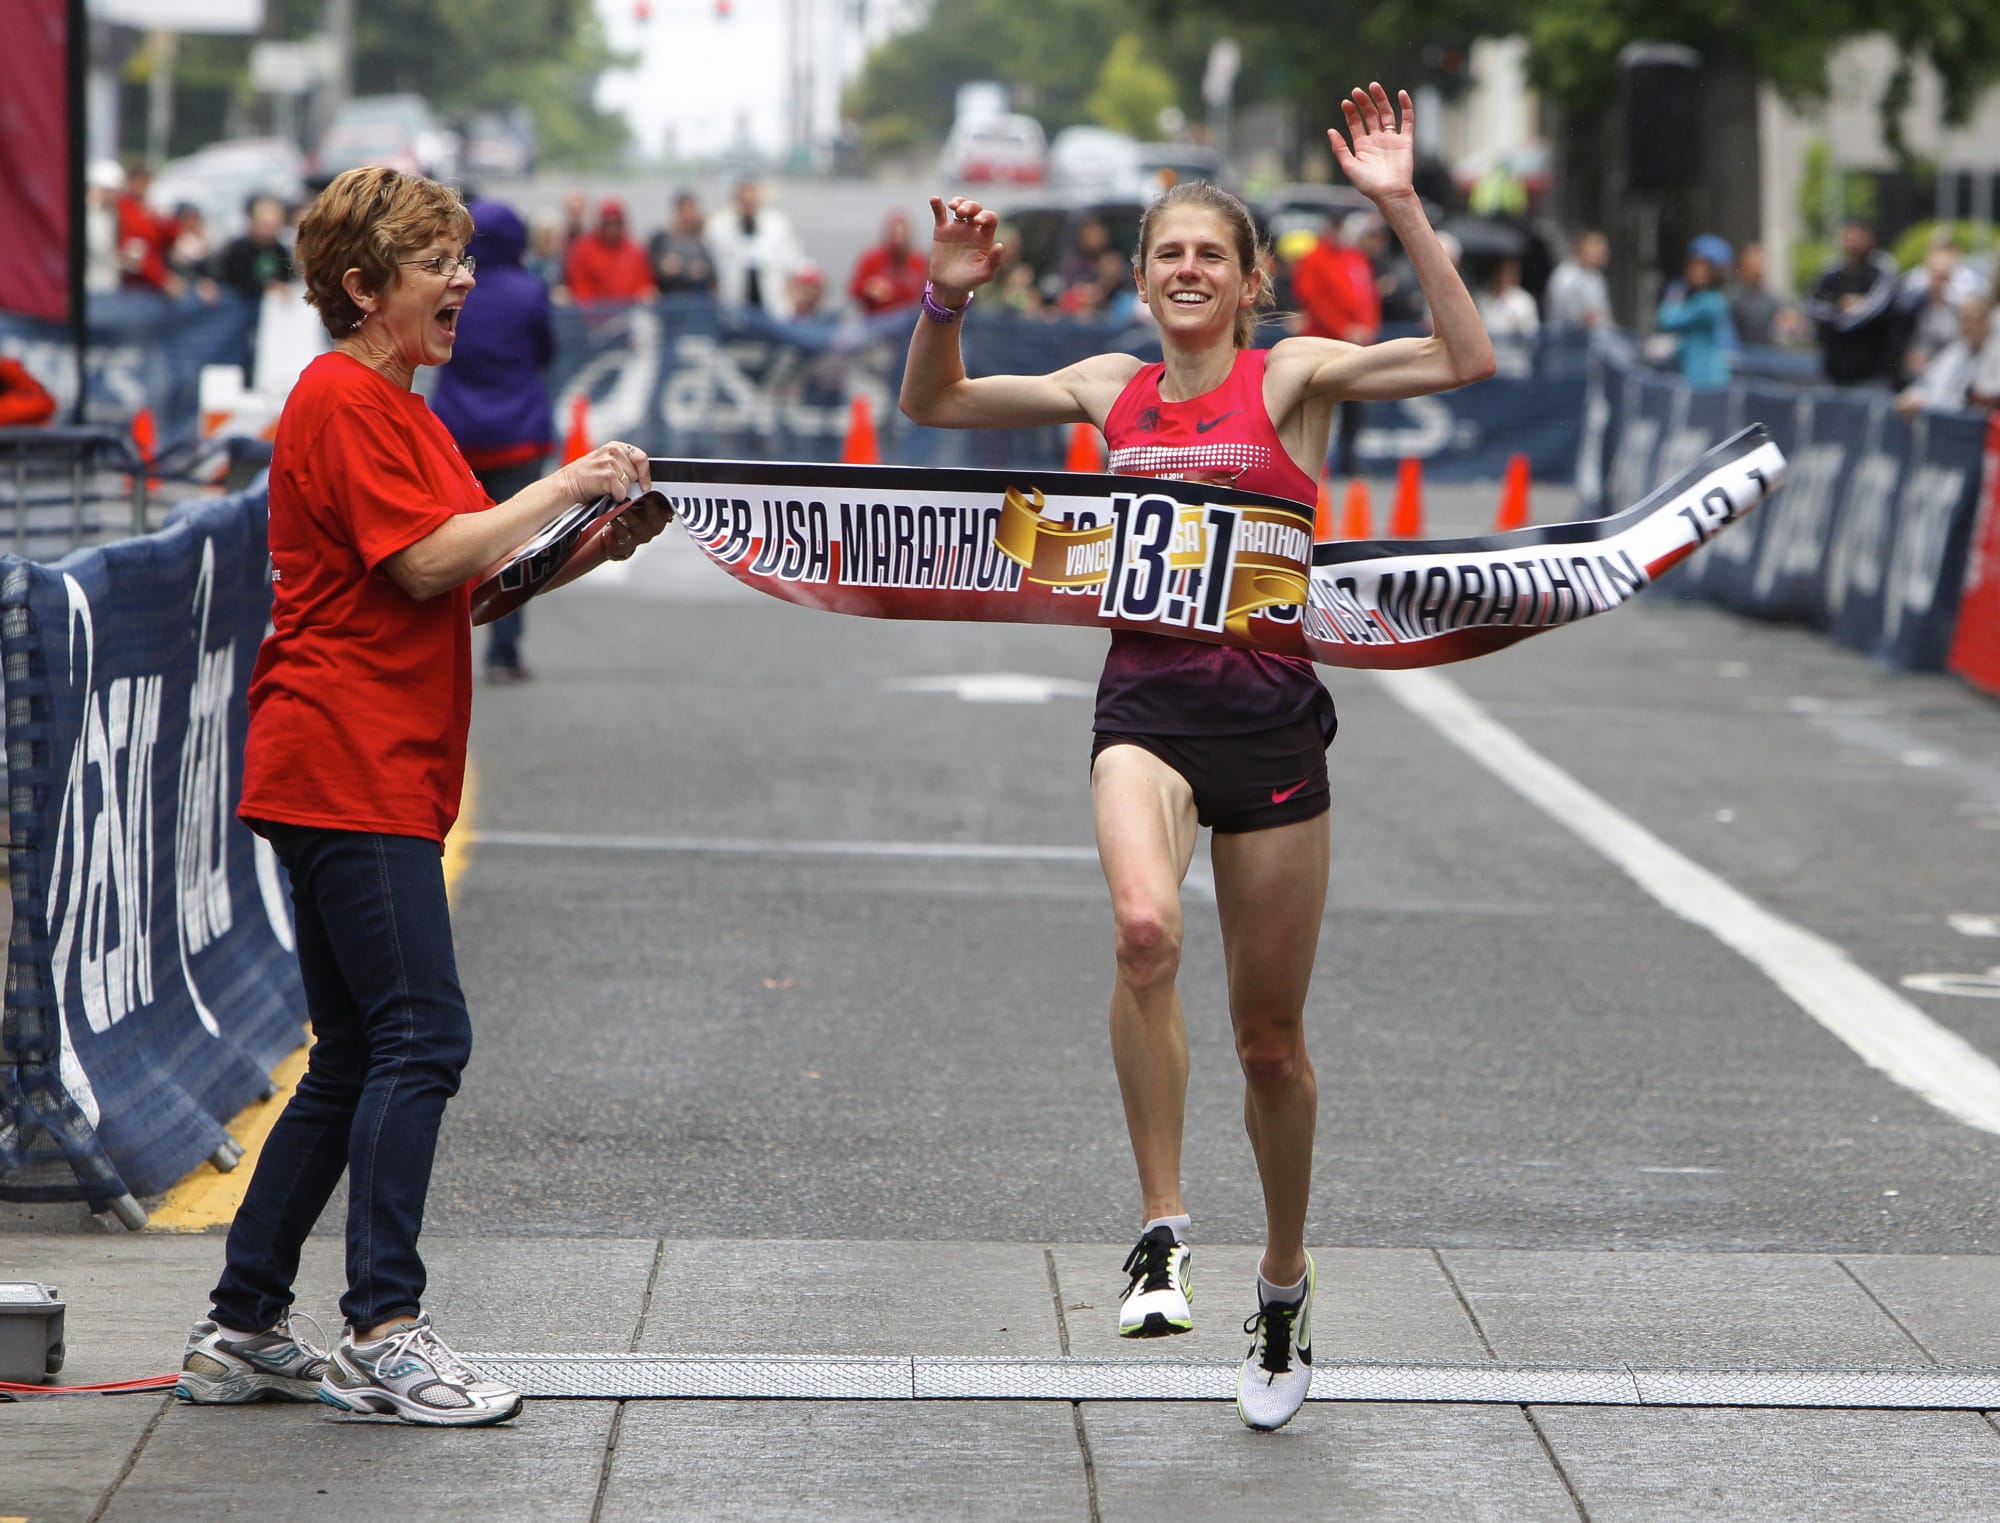 Lauren Johnson
Women's winner, half marathon